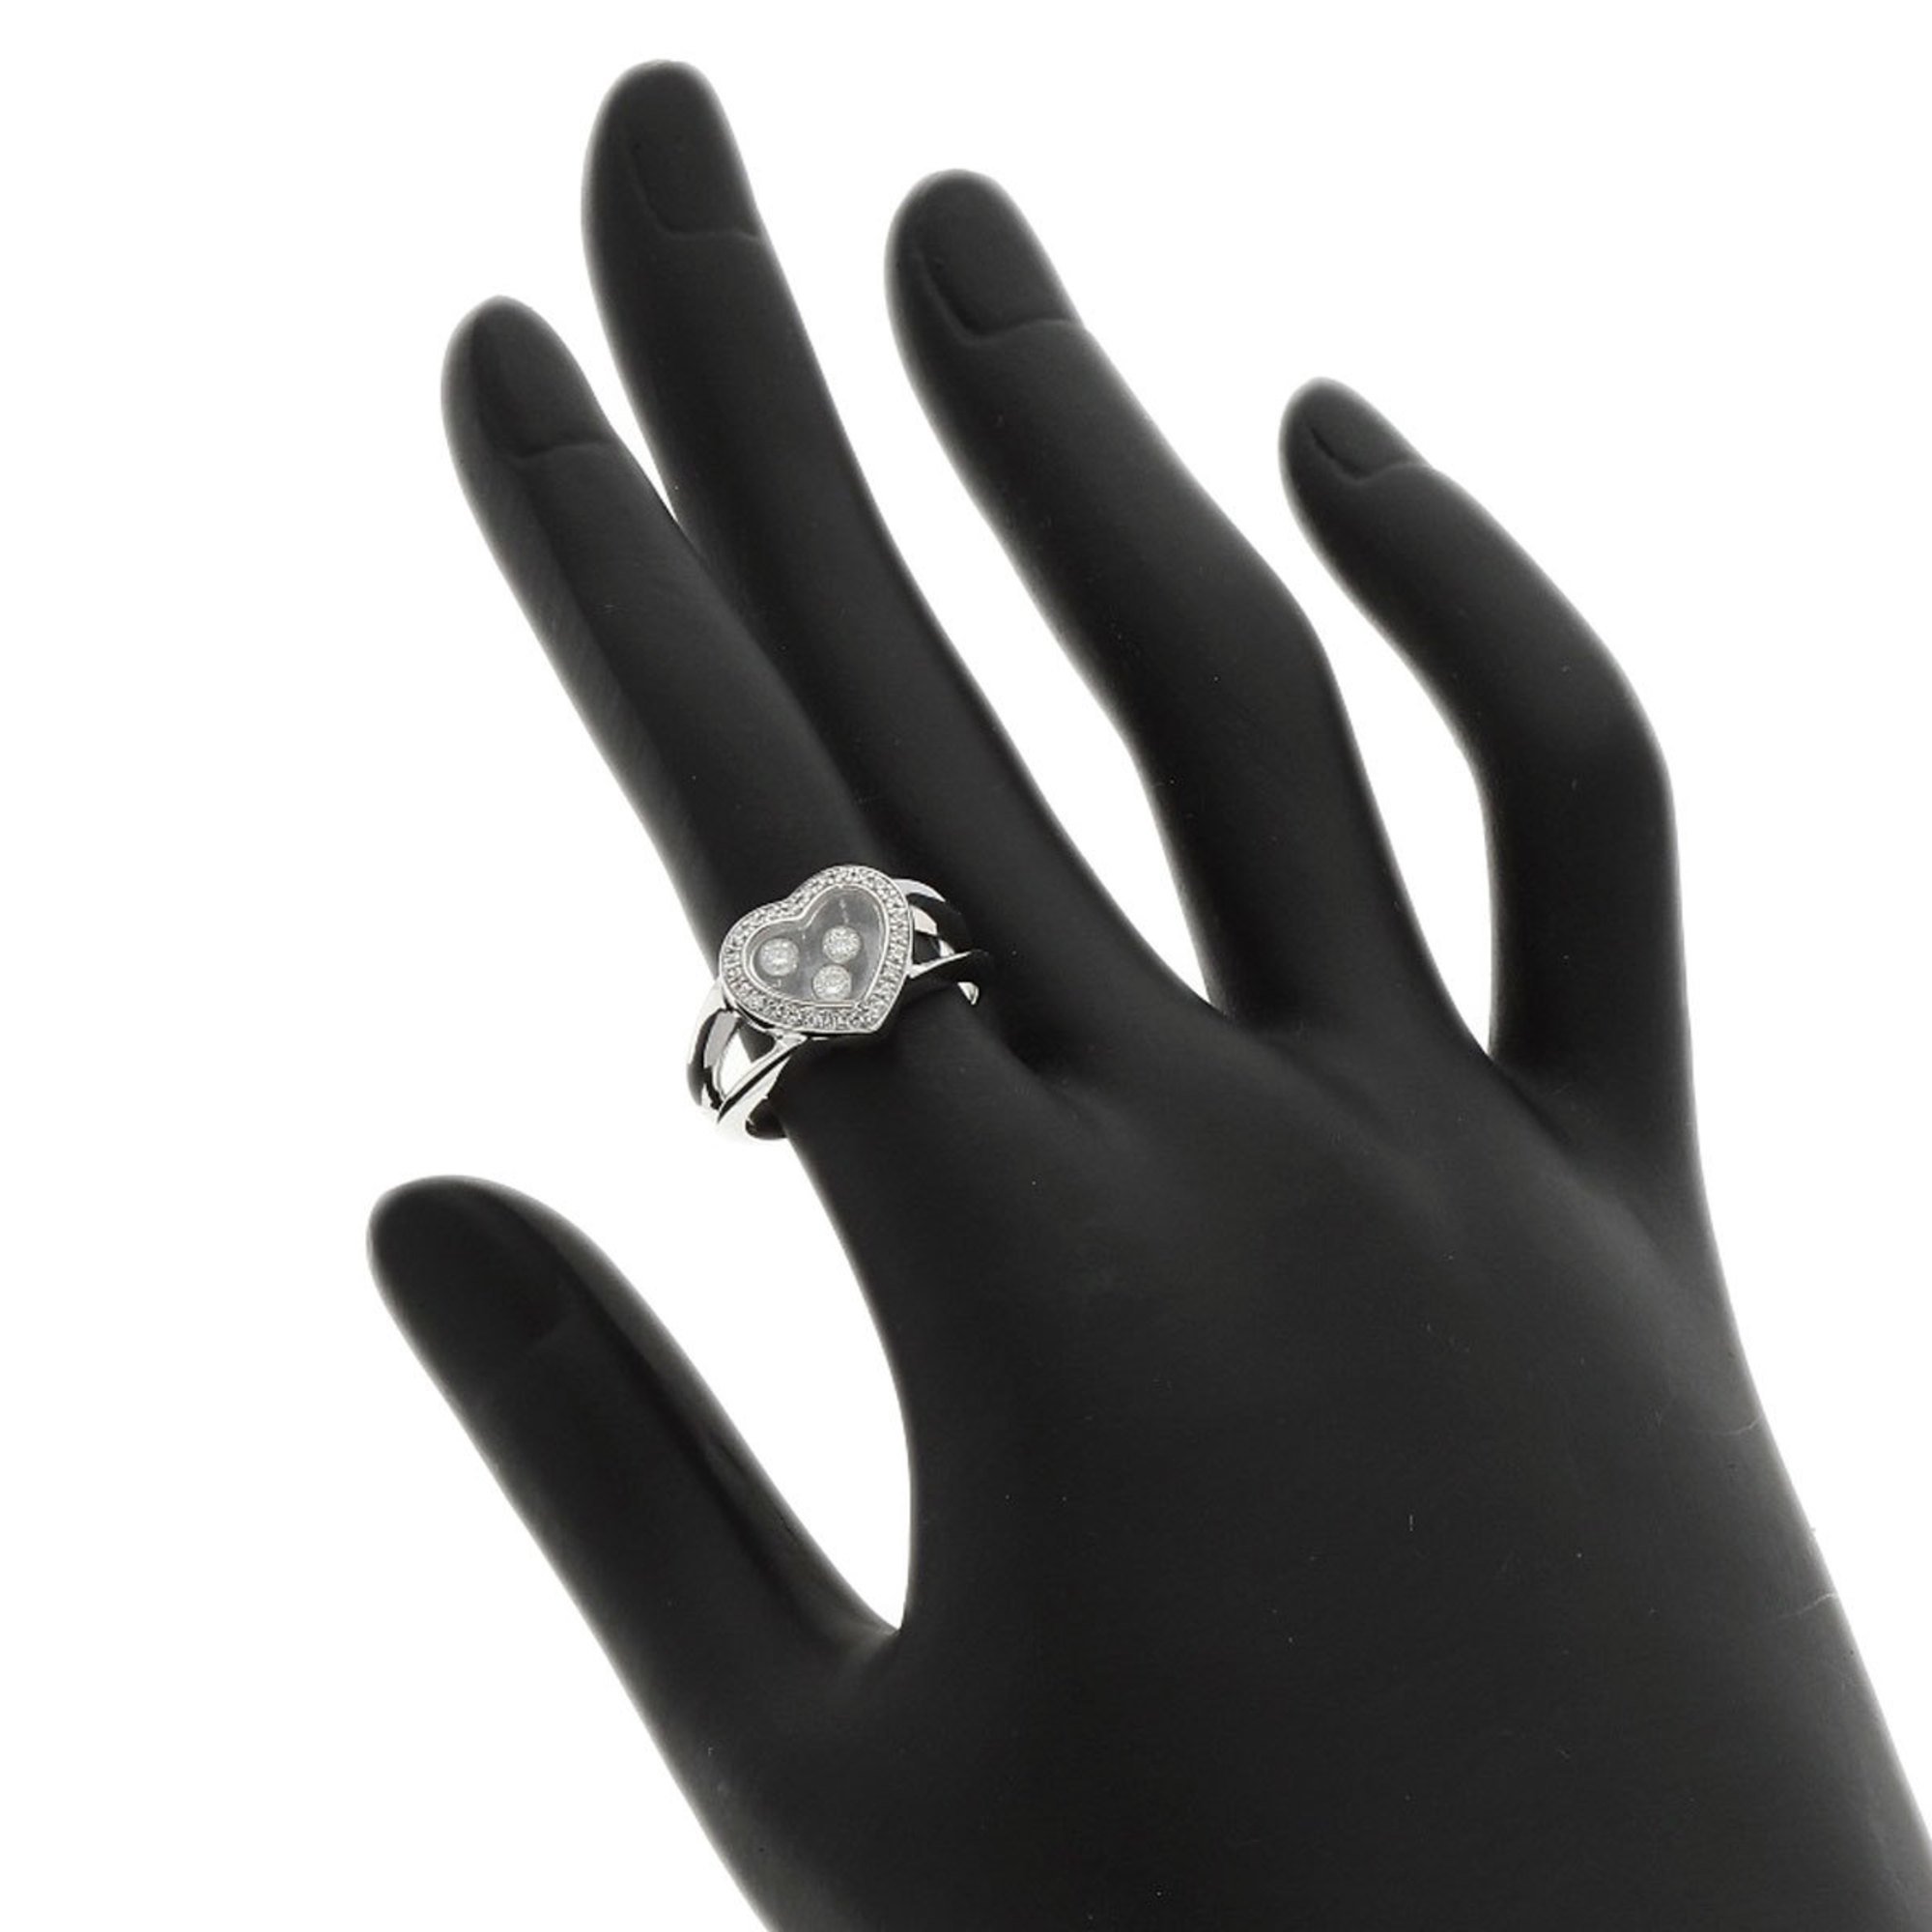 Chopard Happy Diamonds Ring, 18K White Gold, Women's